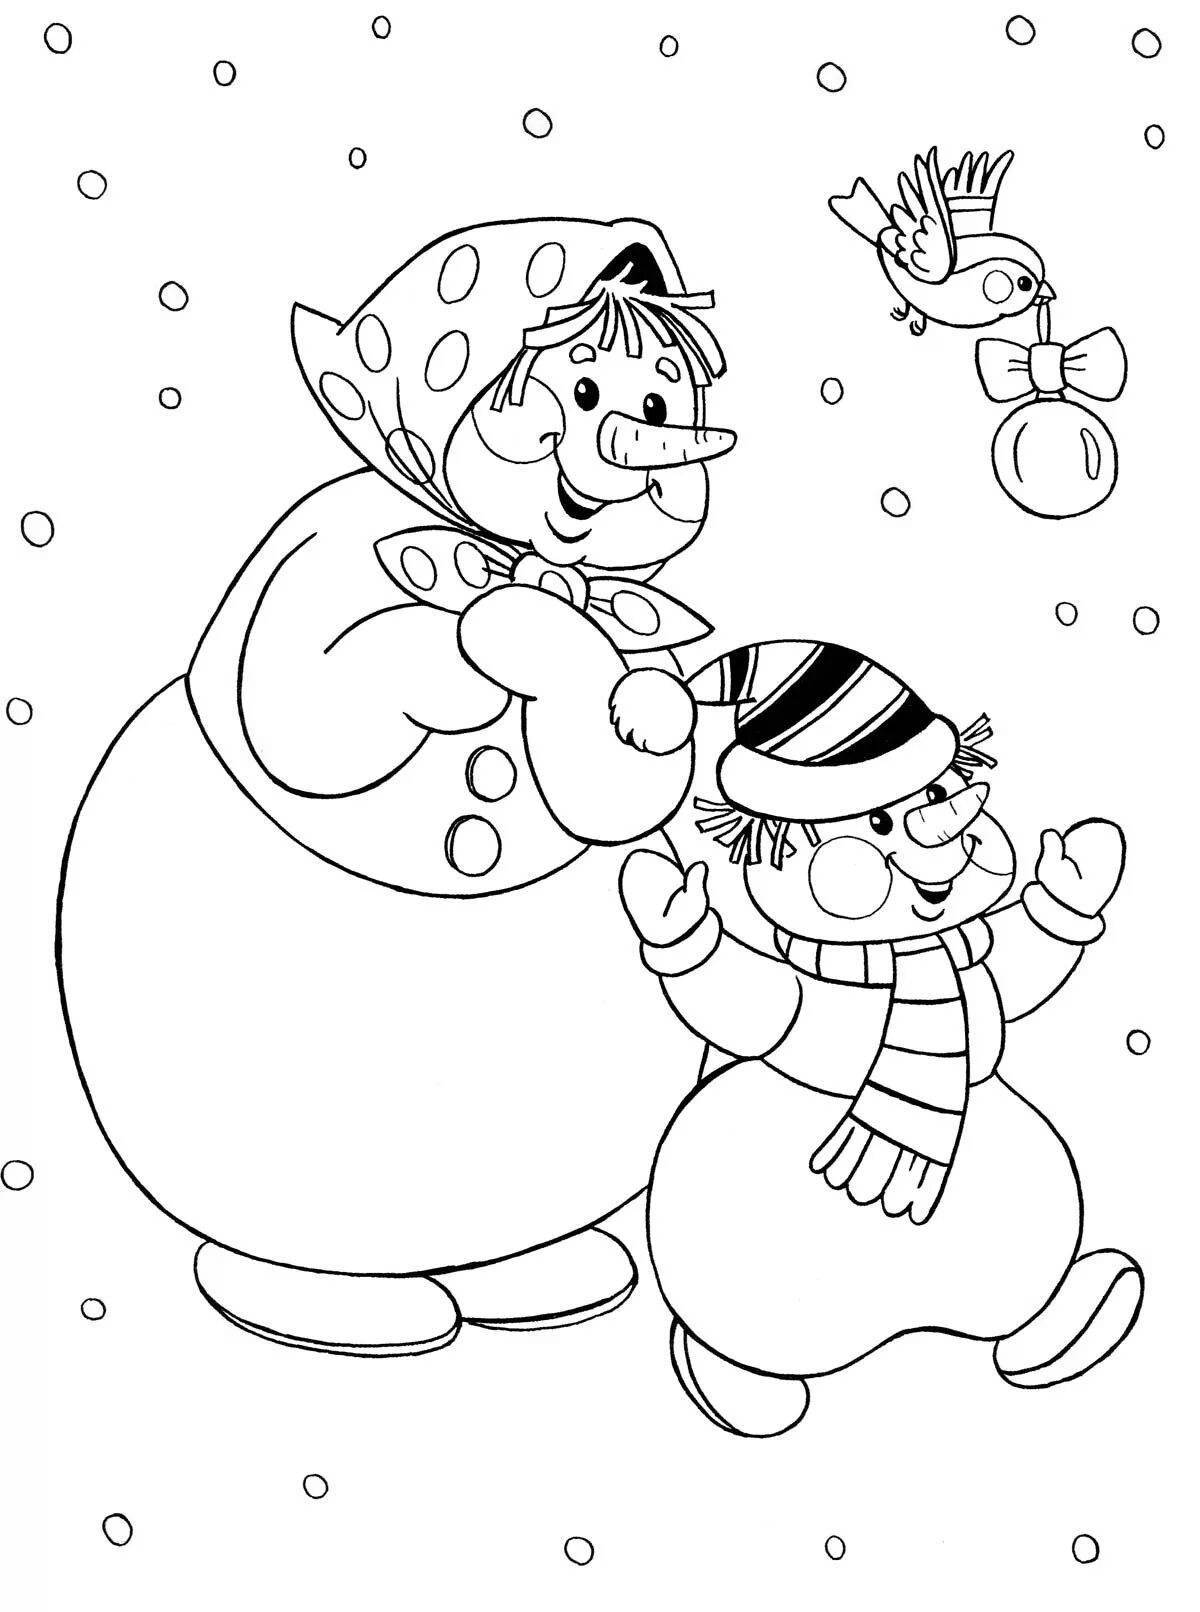 Snowy children's snowman coloring book